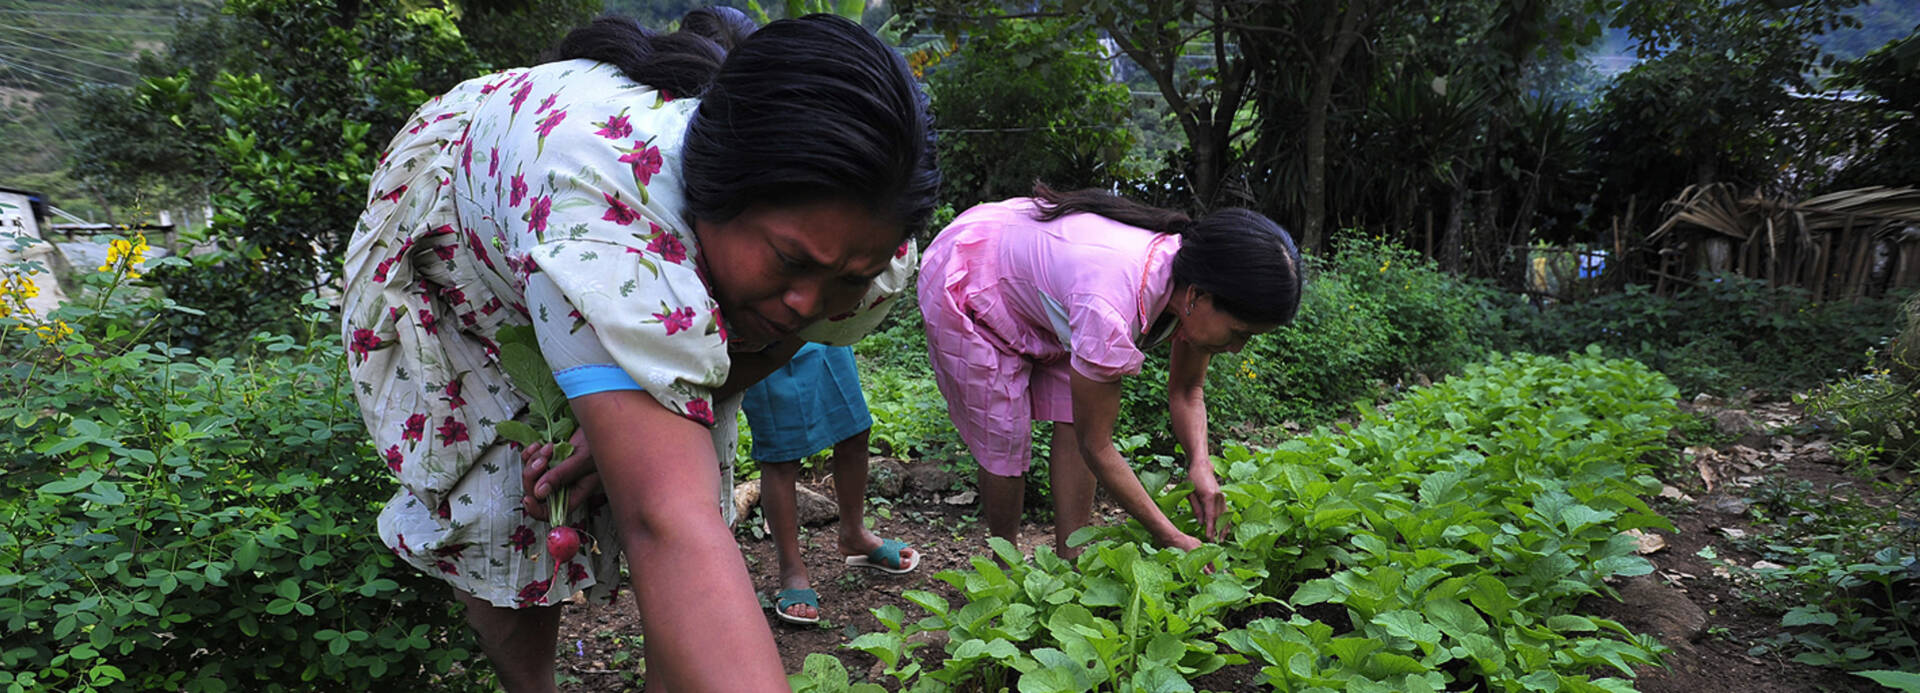 Frauen arbeiten auf einem Feld in Guatemala.